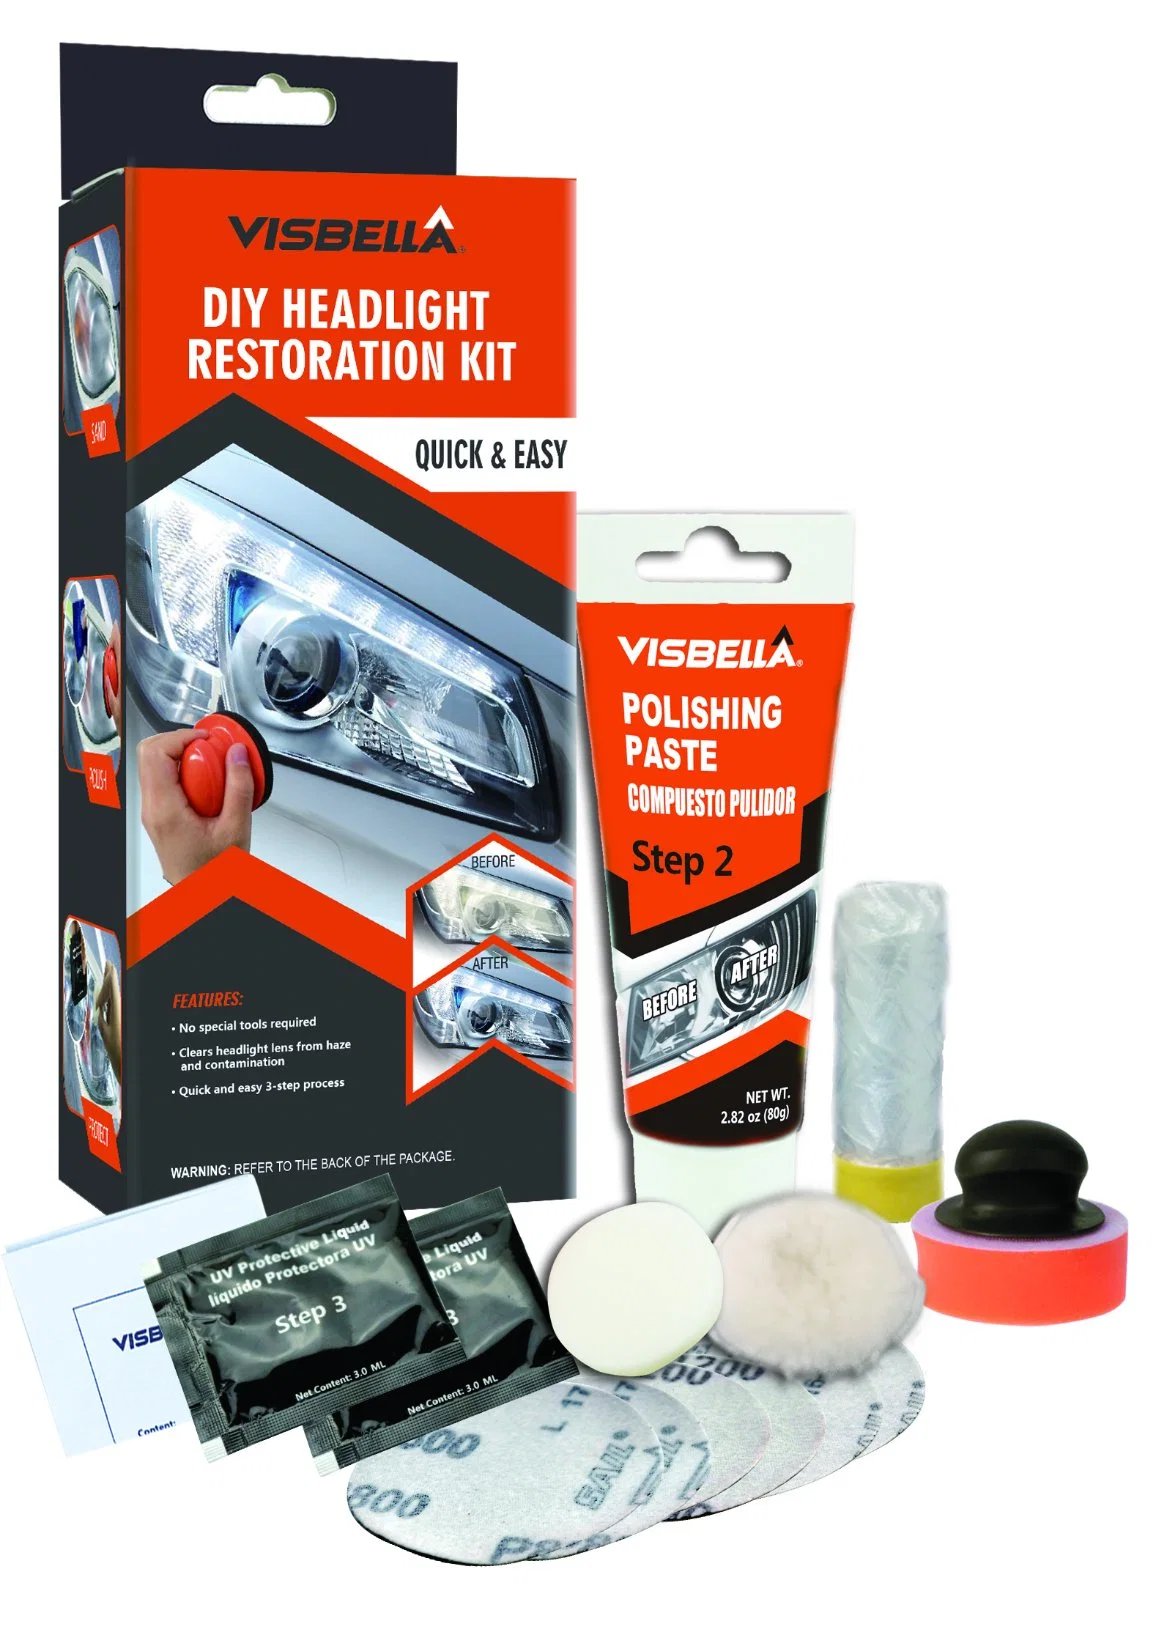 Visbella DIY Car Headlight Limpieza Headlight Kit de restauración Manual Color Caja